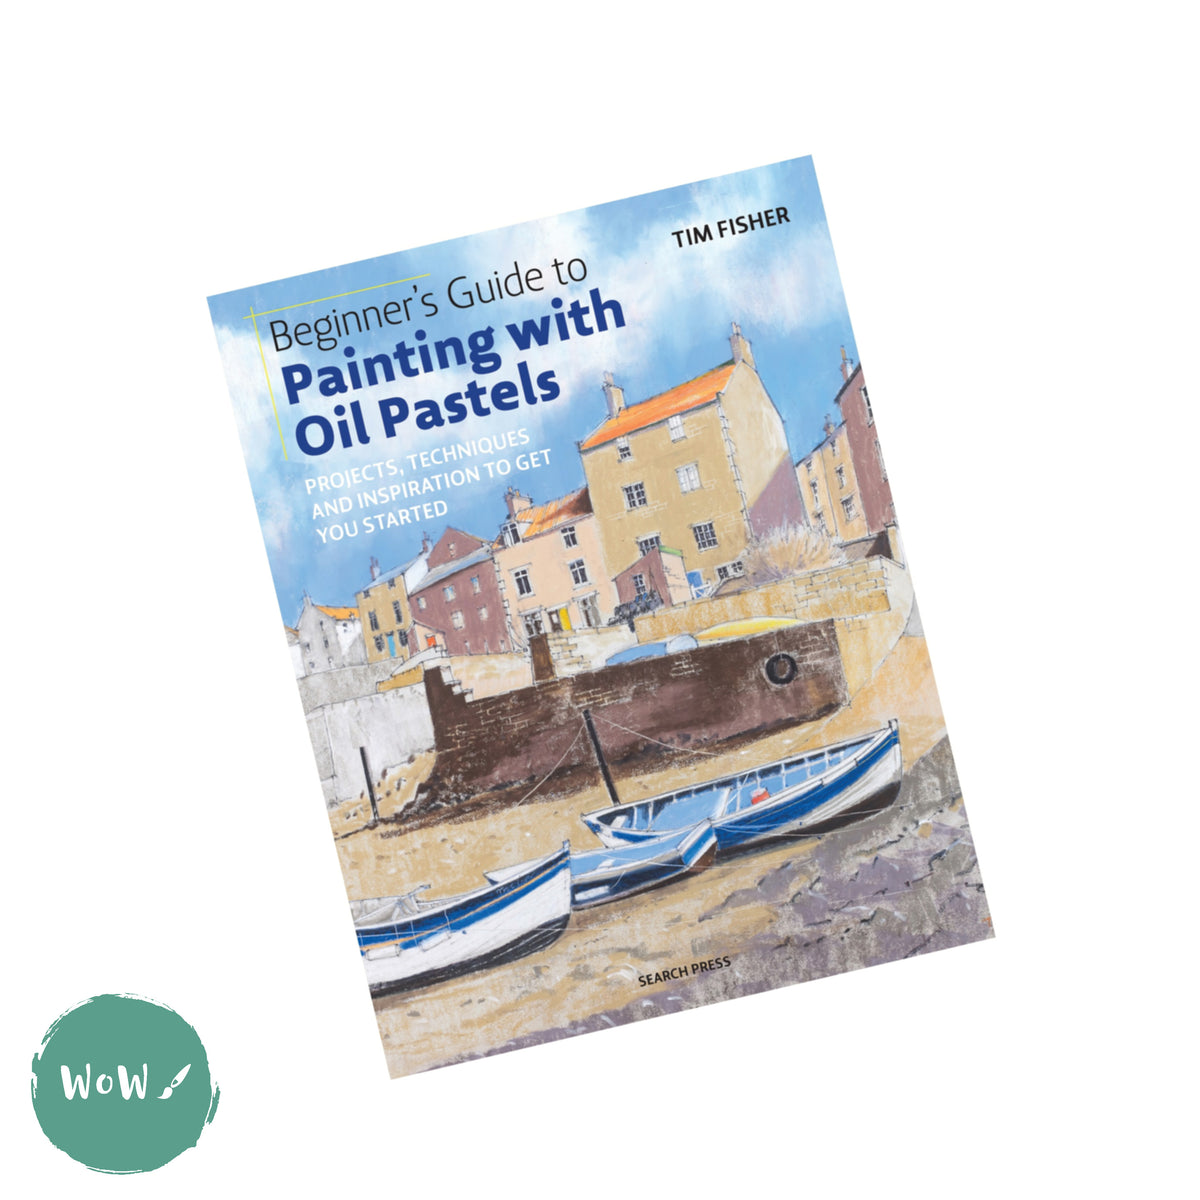 Oil Pastels [Book]